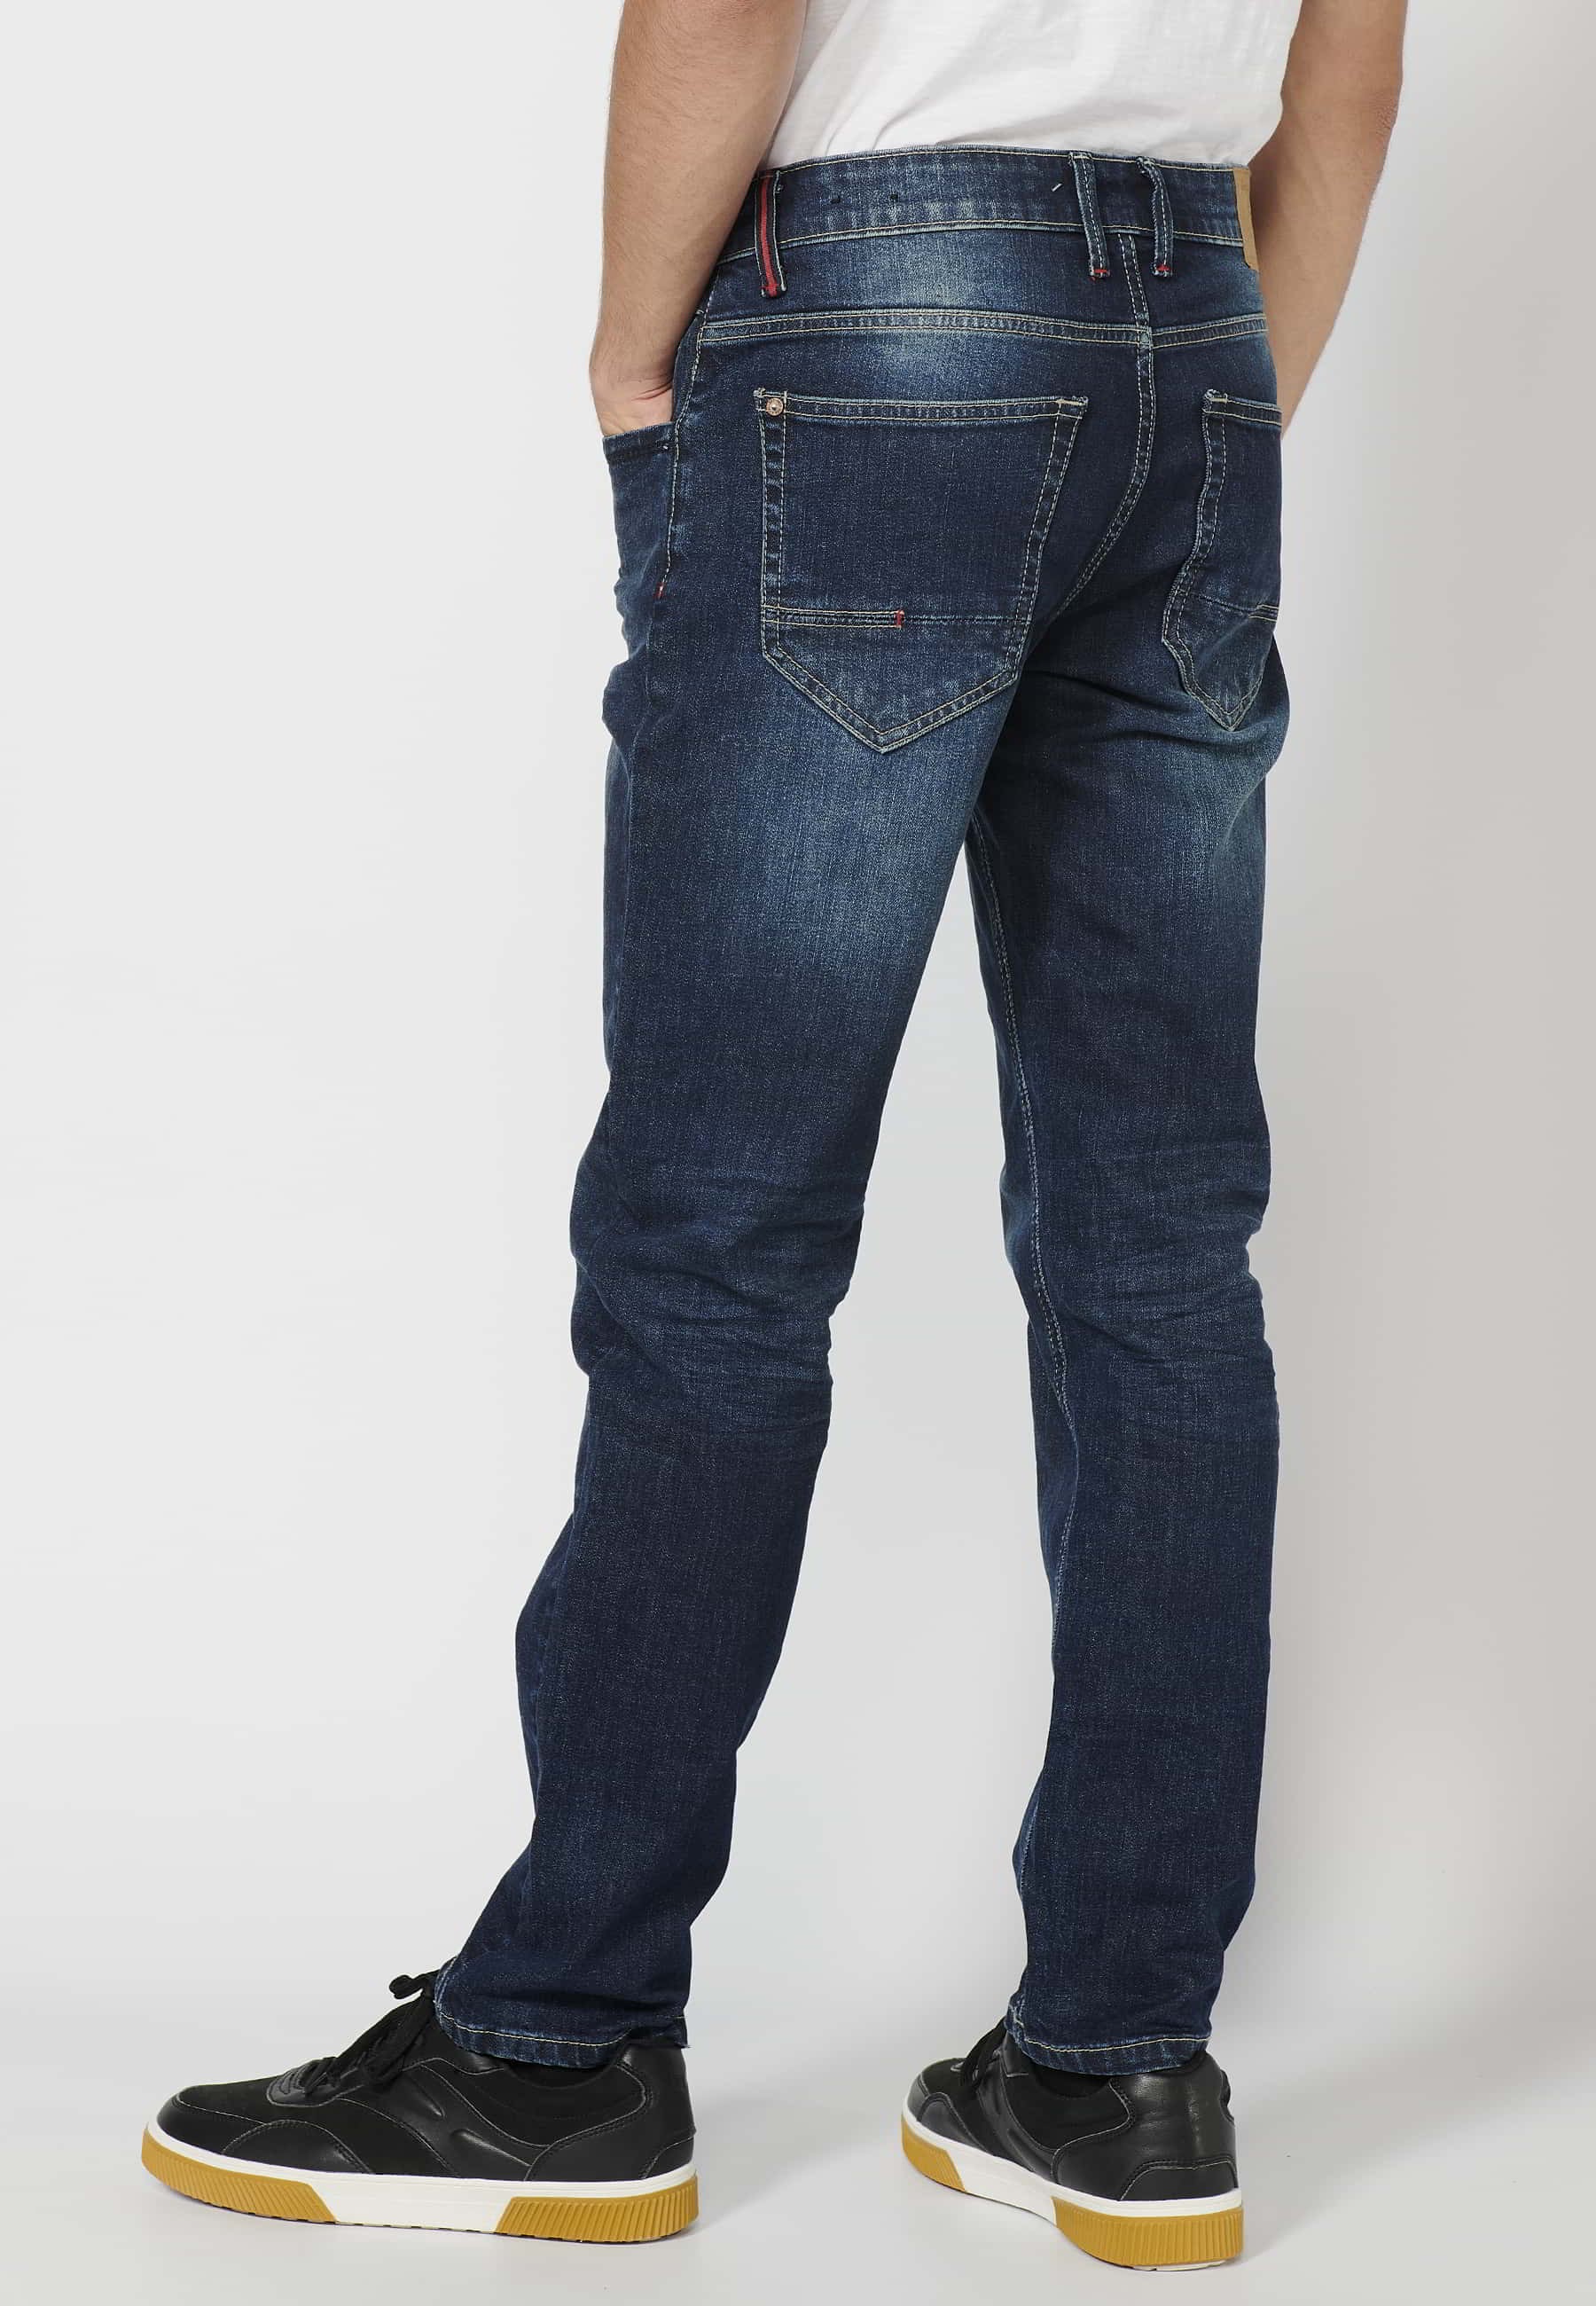 Pantalón Jeans straigth Regular Fit color Azul Oscuro para Hombre